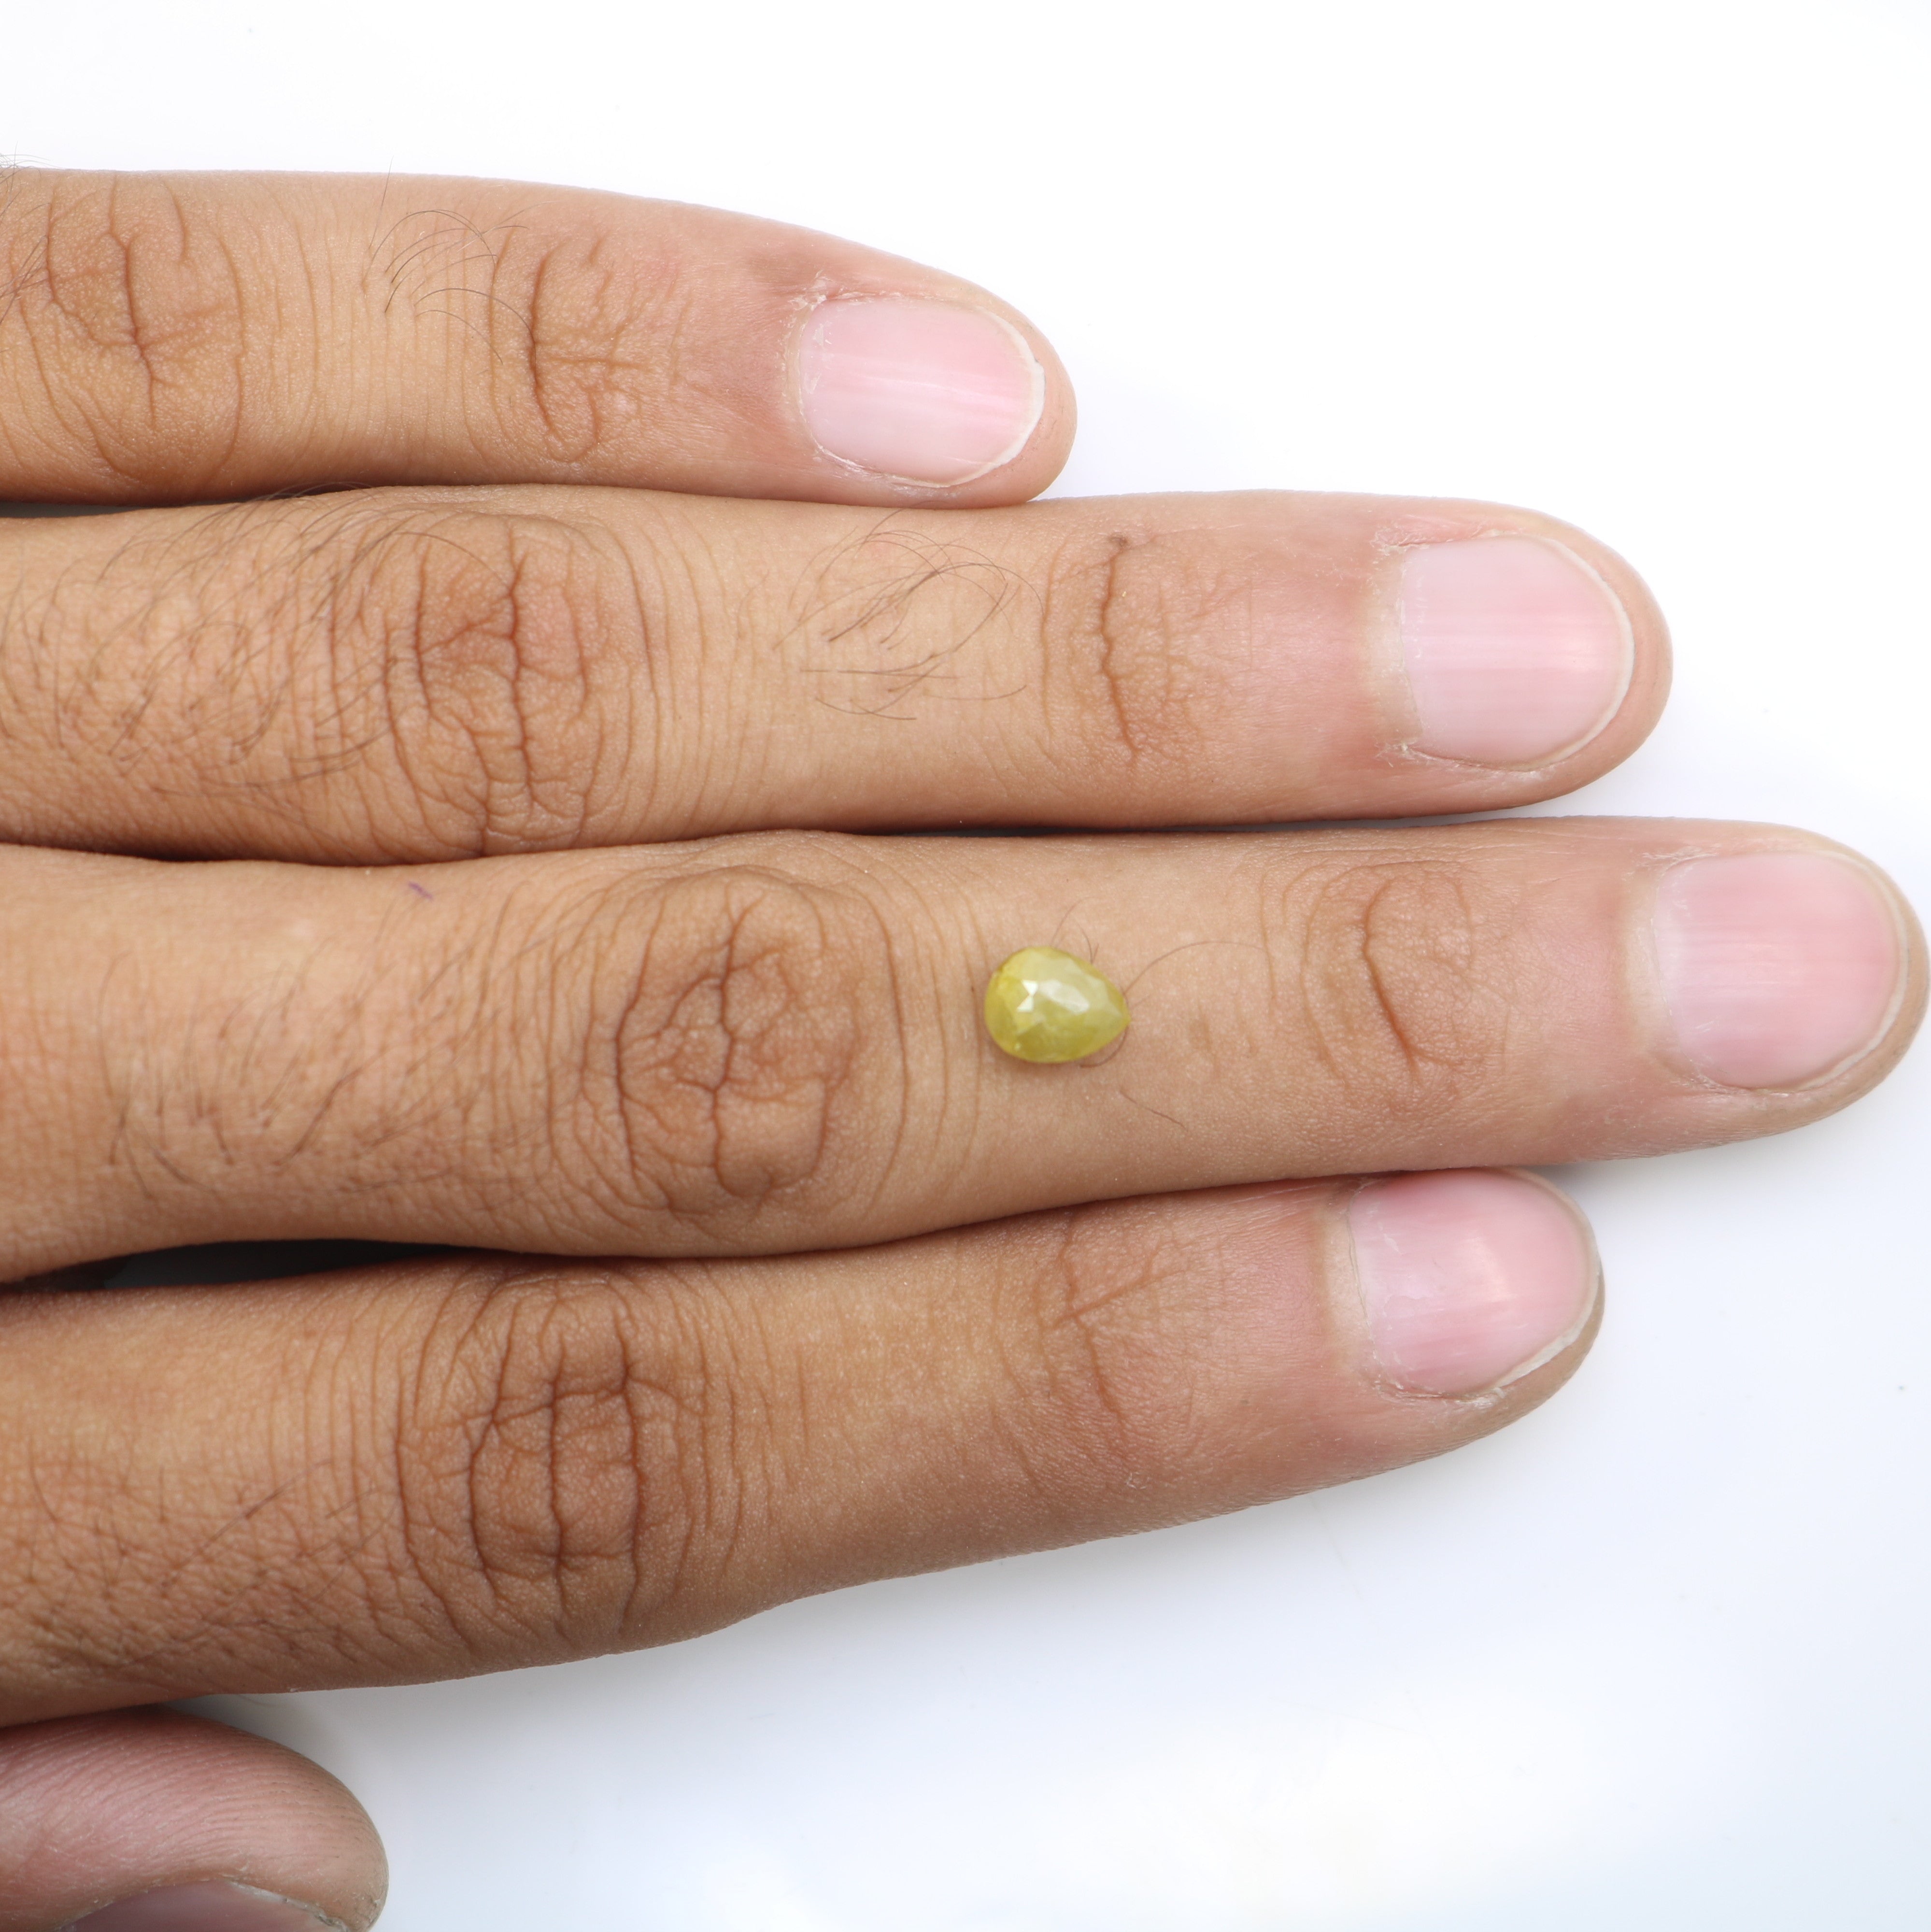 1.41 Carat Natural Loose Pear Shape Rustic Yellow Diamond For Wedding Ring